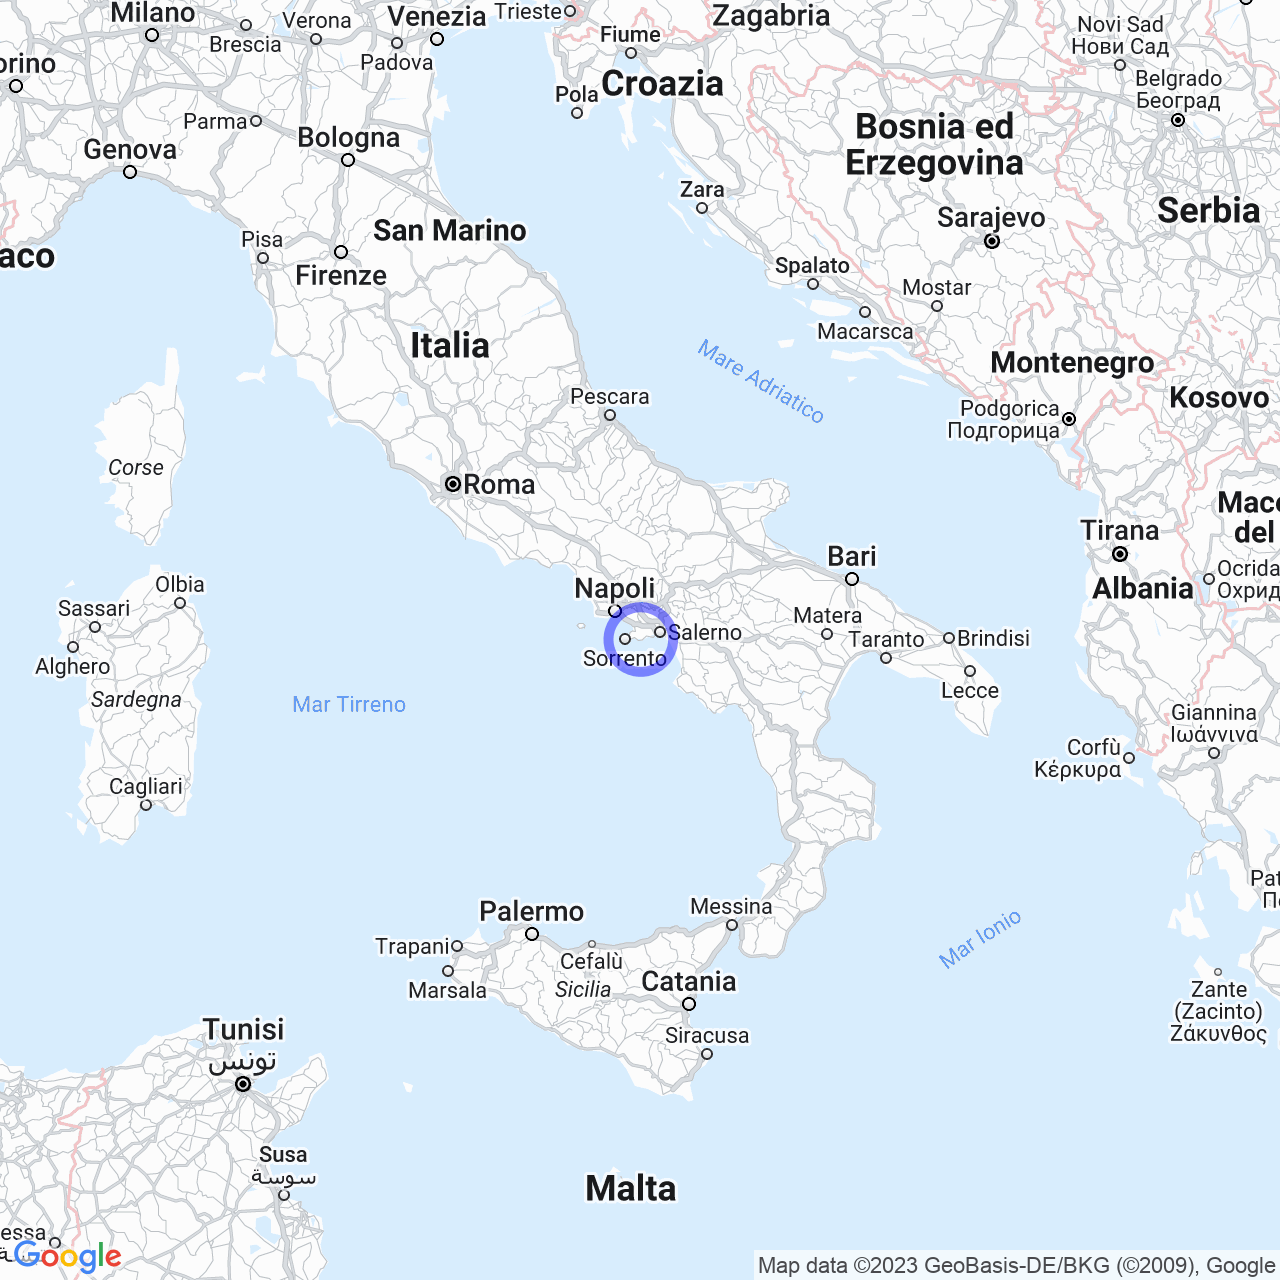 Furore, the hidden treasure of the Amalfi Coast.